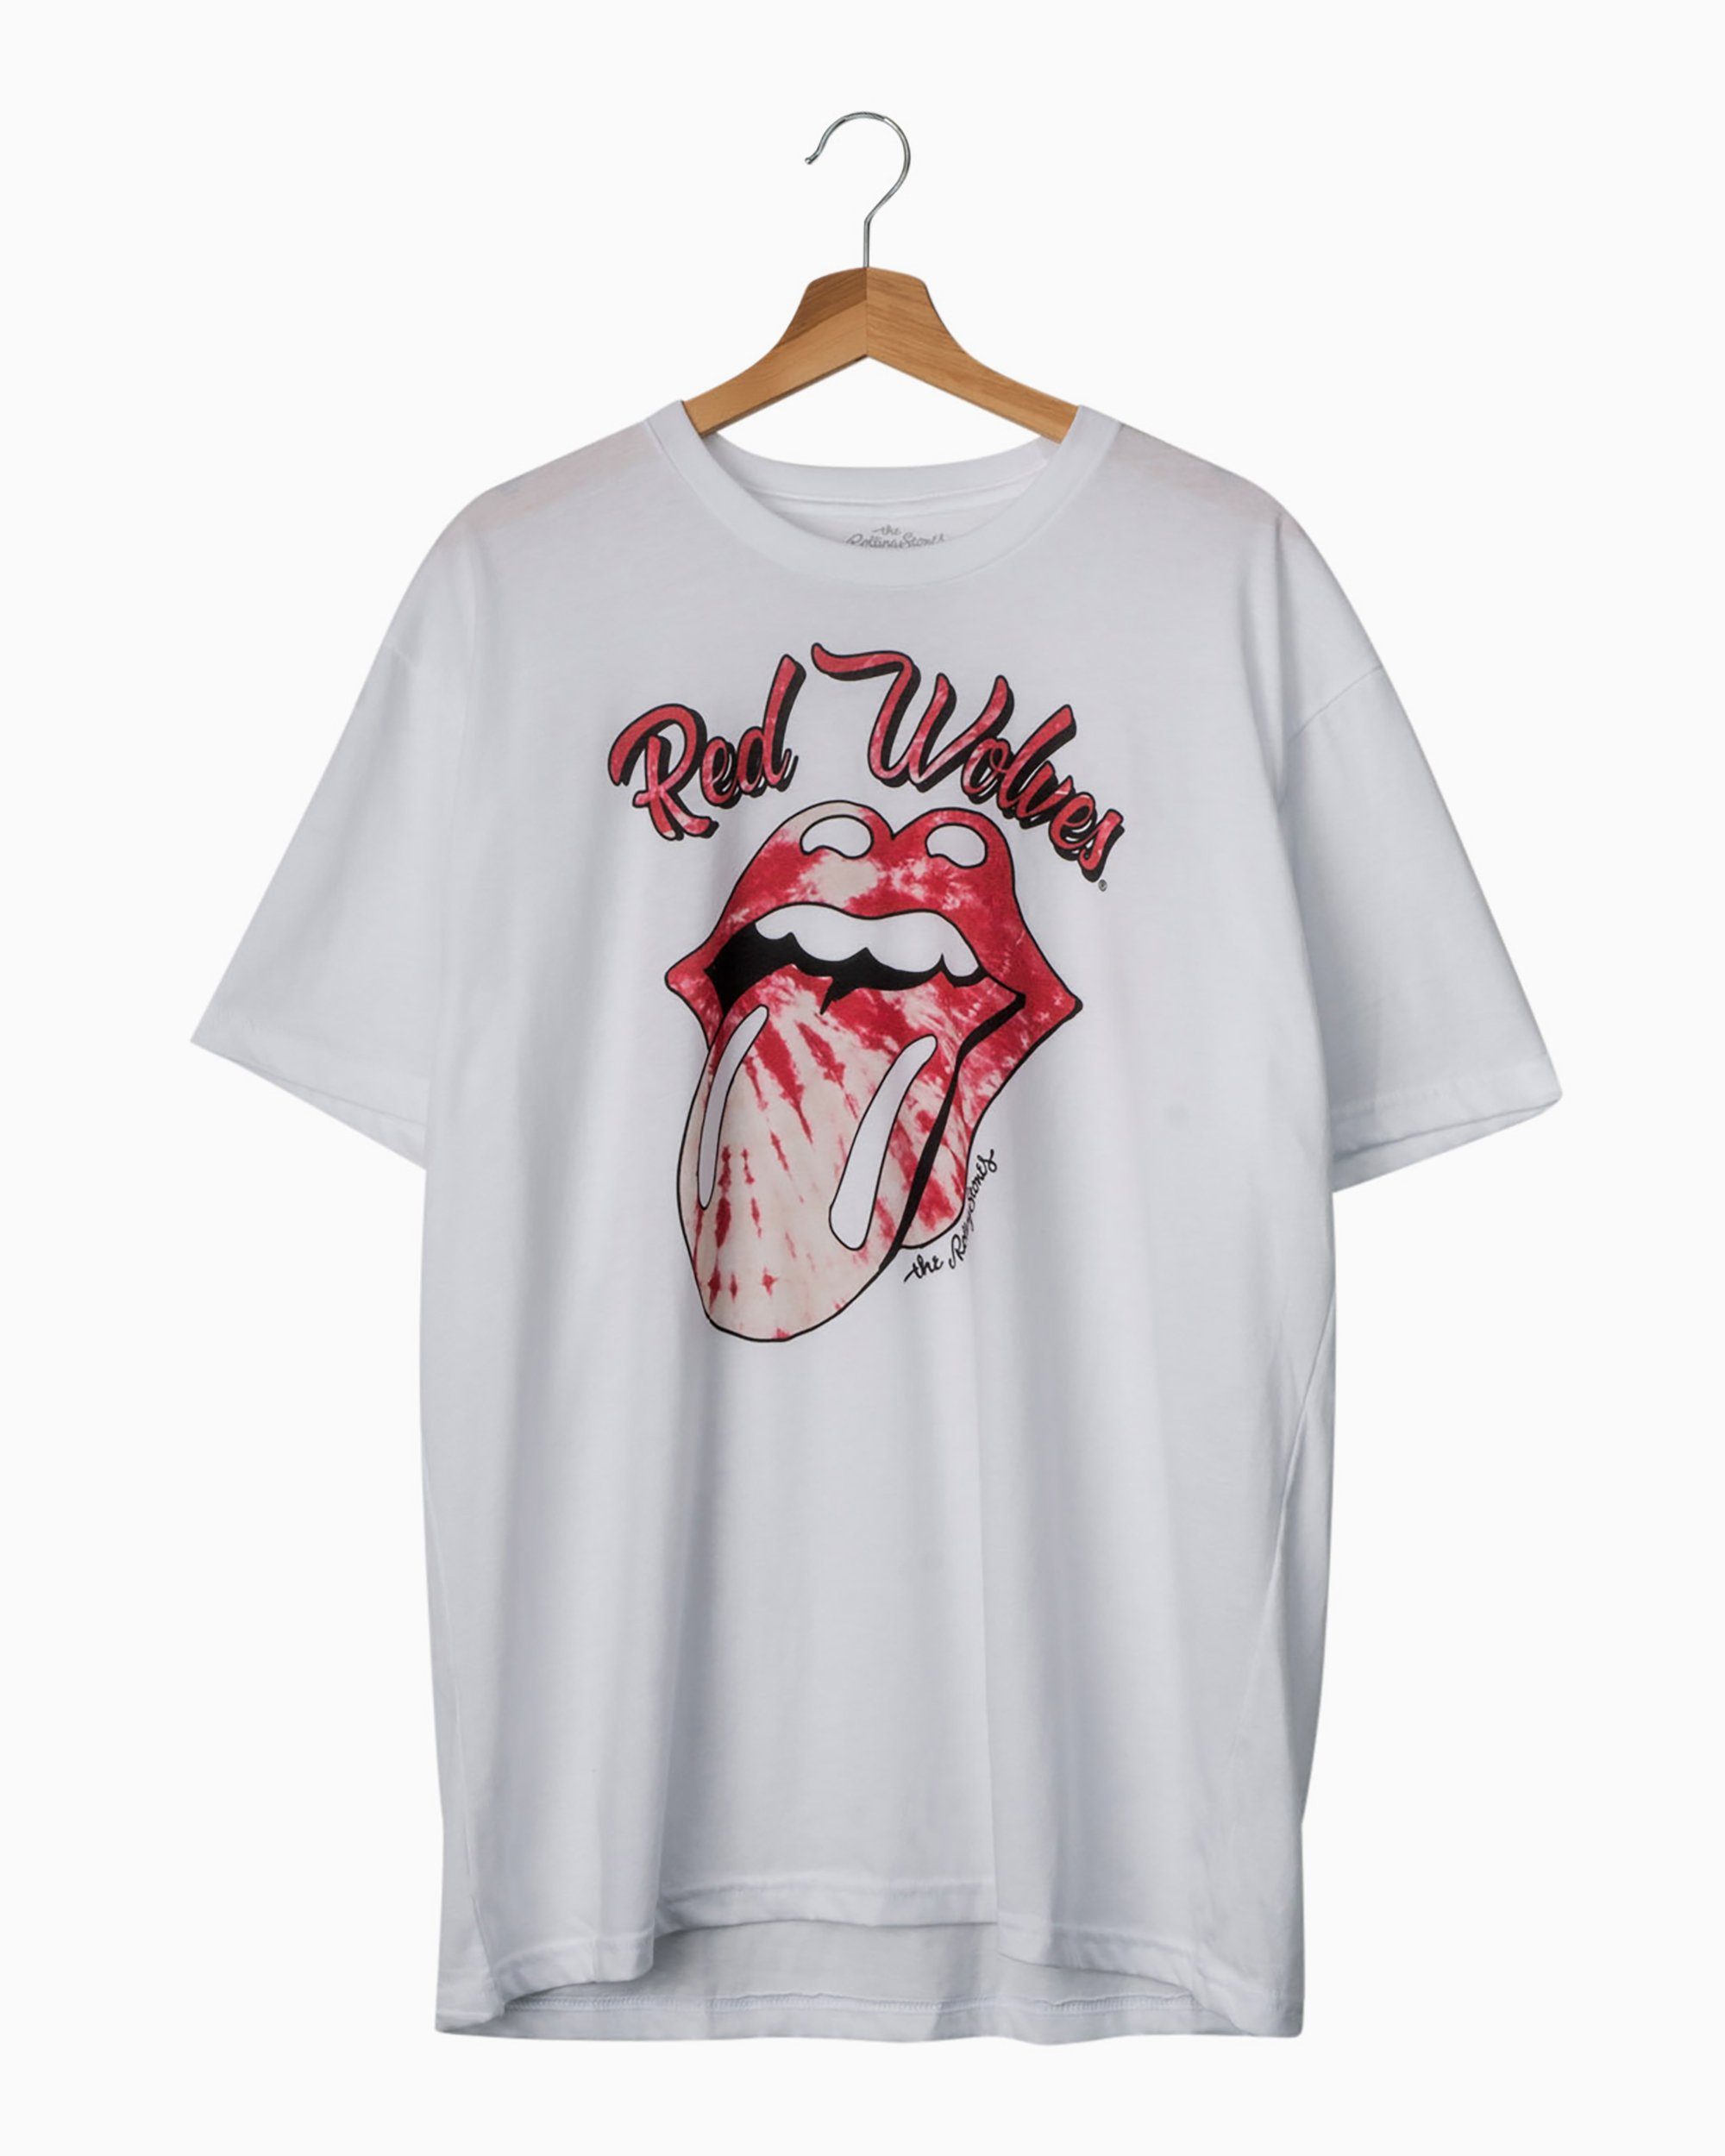 Rolling Stones Red Wolves Tie Dye Lick White Tee - shoplivylu